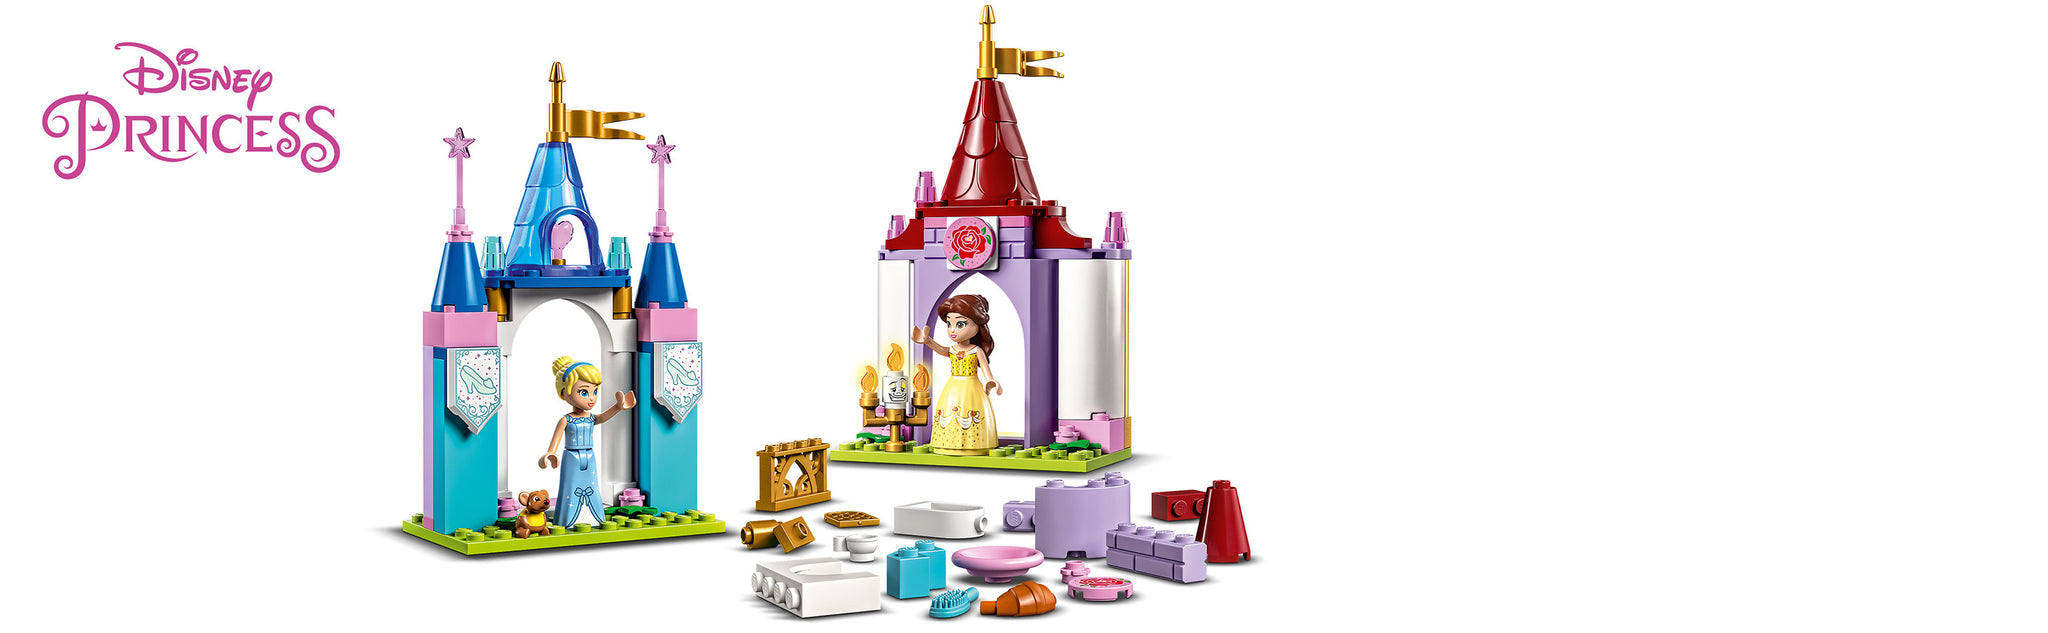 LEGO 43219 Disney Princess Kreative Schlösser